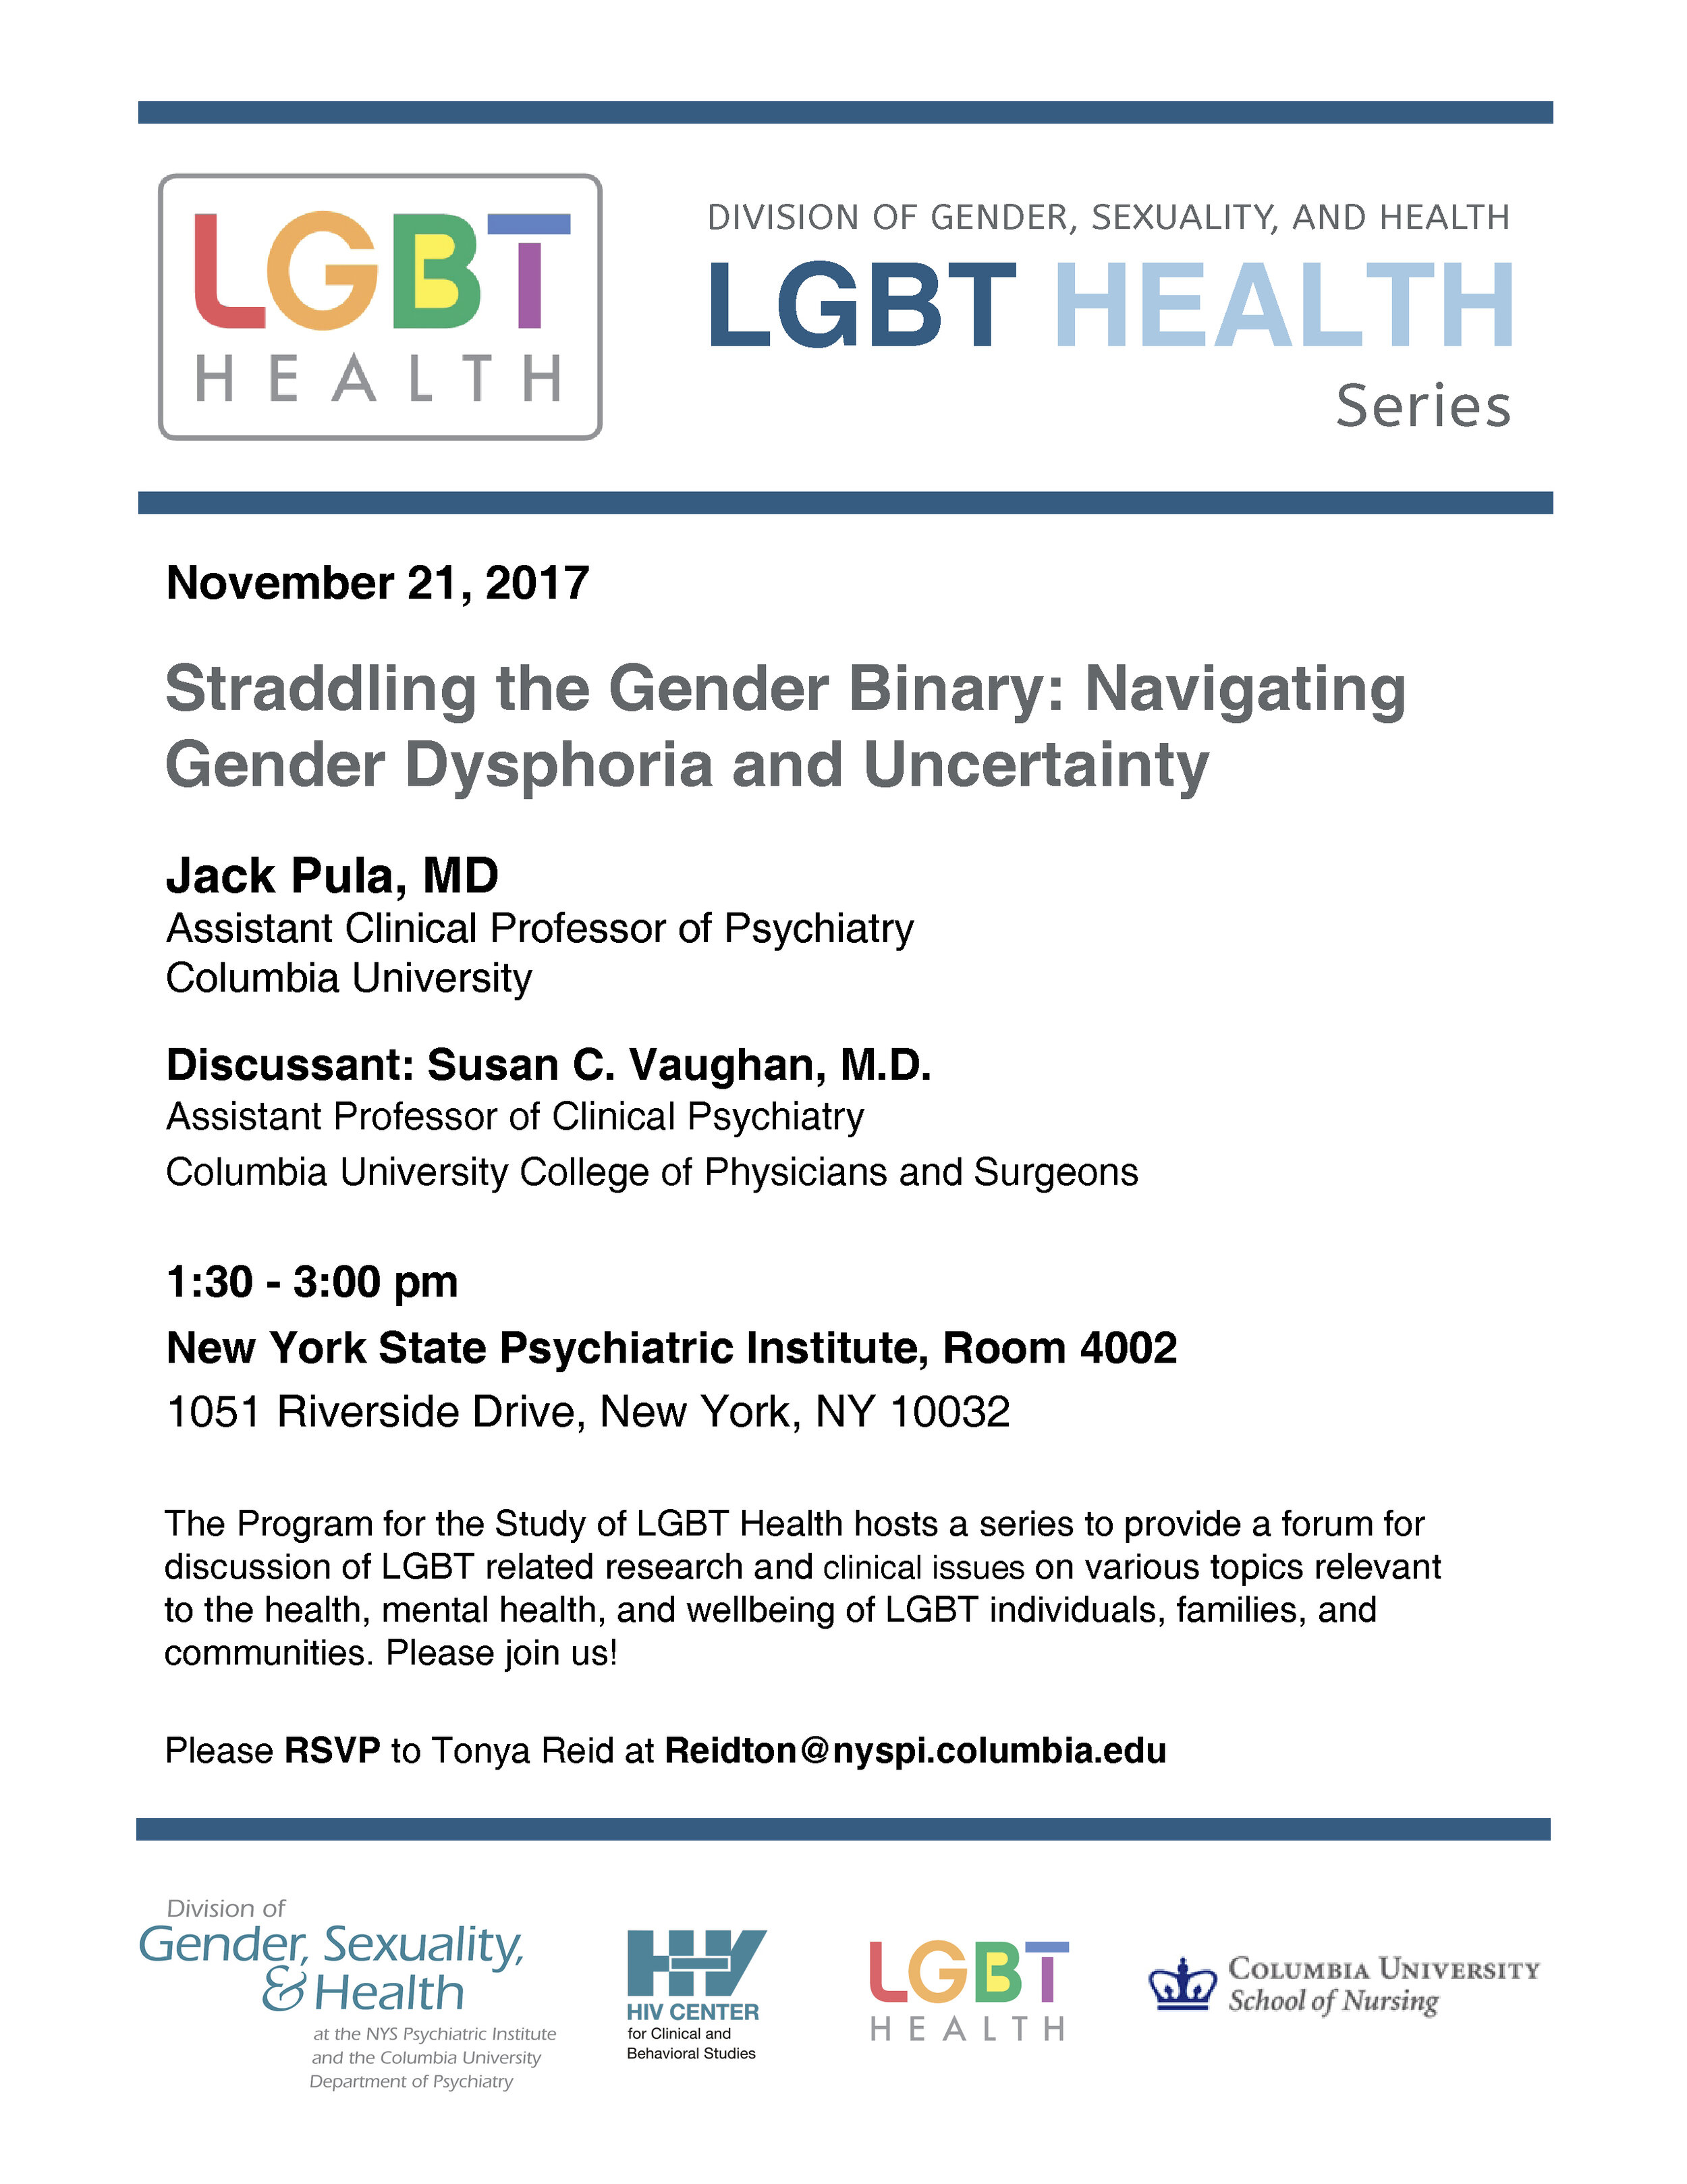 LGBT Health Series Nov 21 2017.jpg